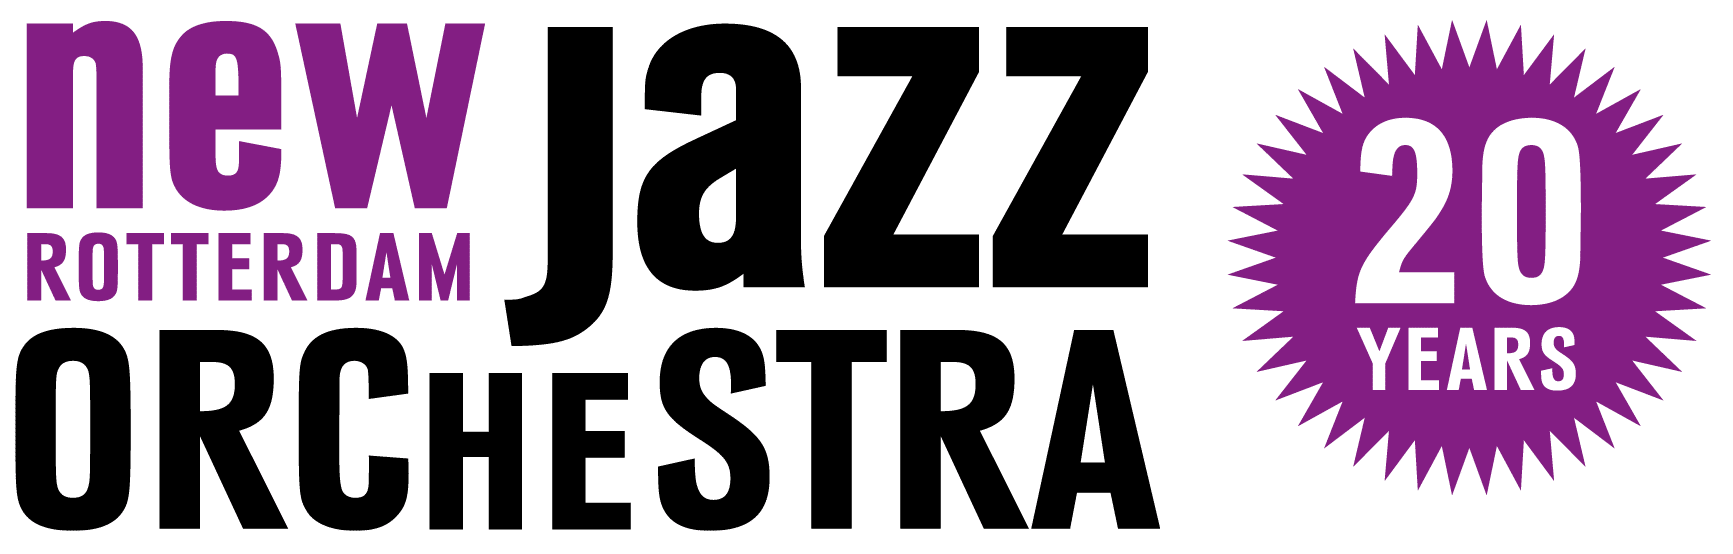 New Rotterdam Jazz Orchestra